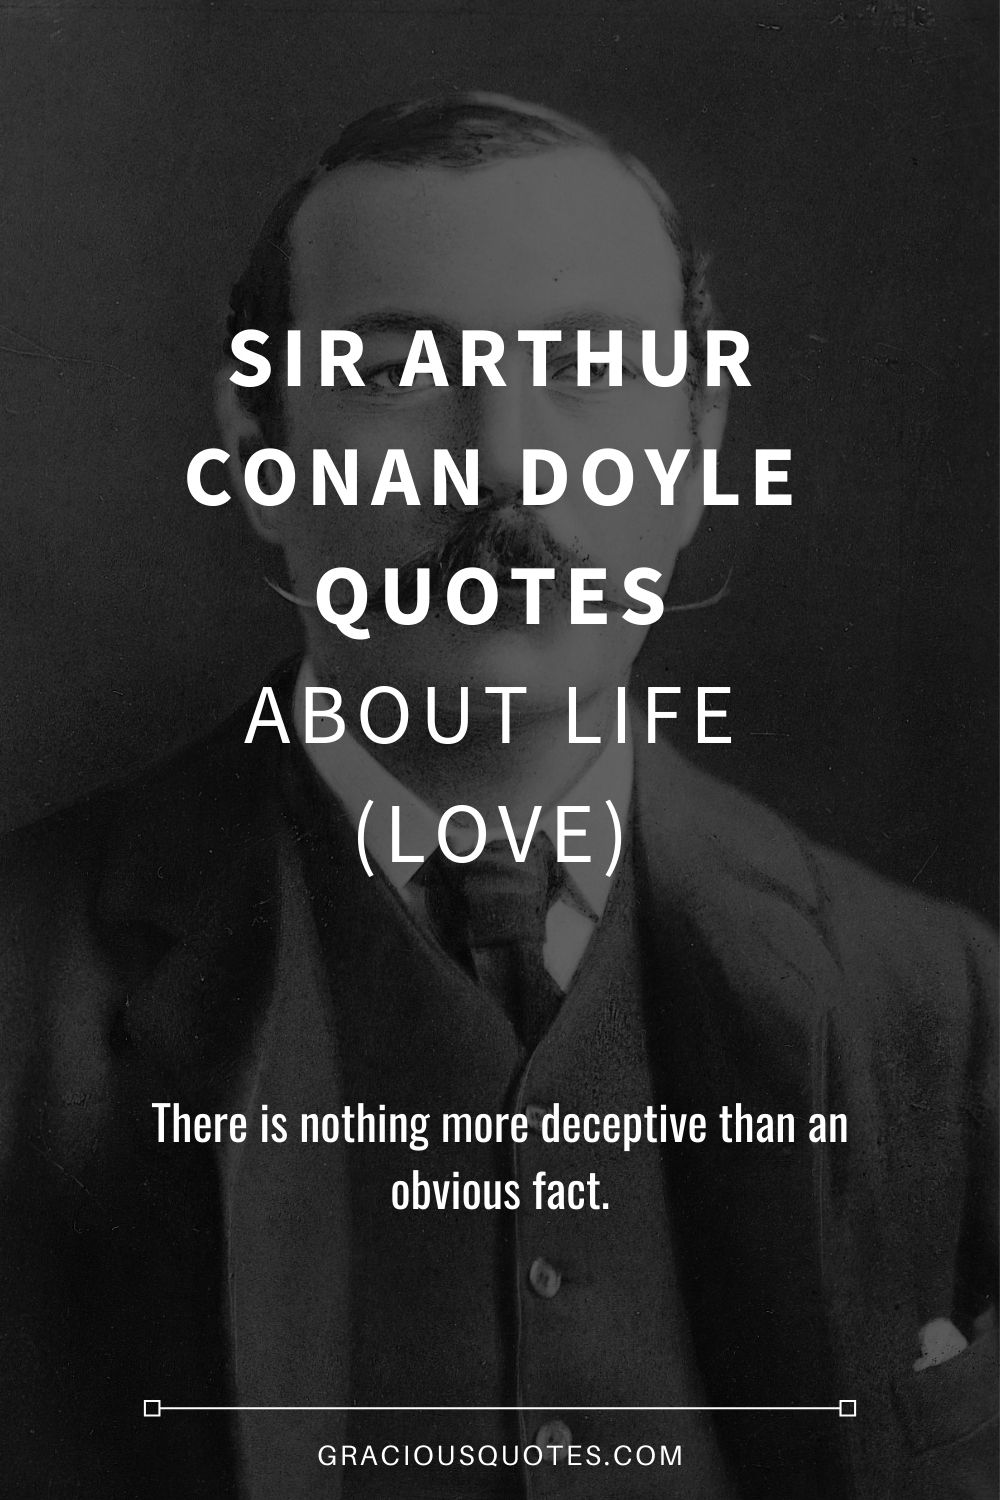 Sir Arthur Conan Doyle Quotes About Life (LOVE) - Gracious Quotes